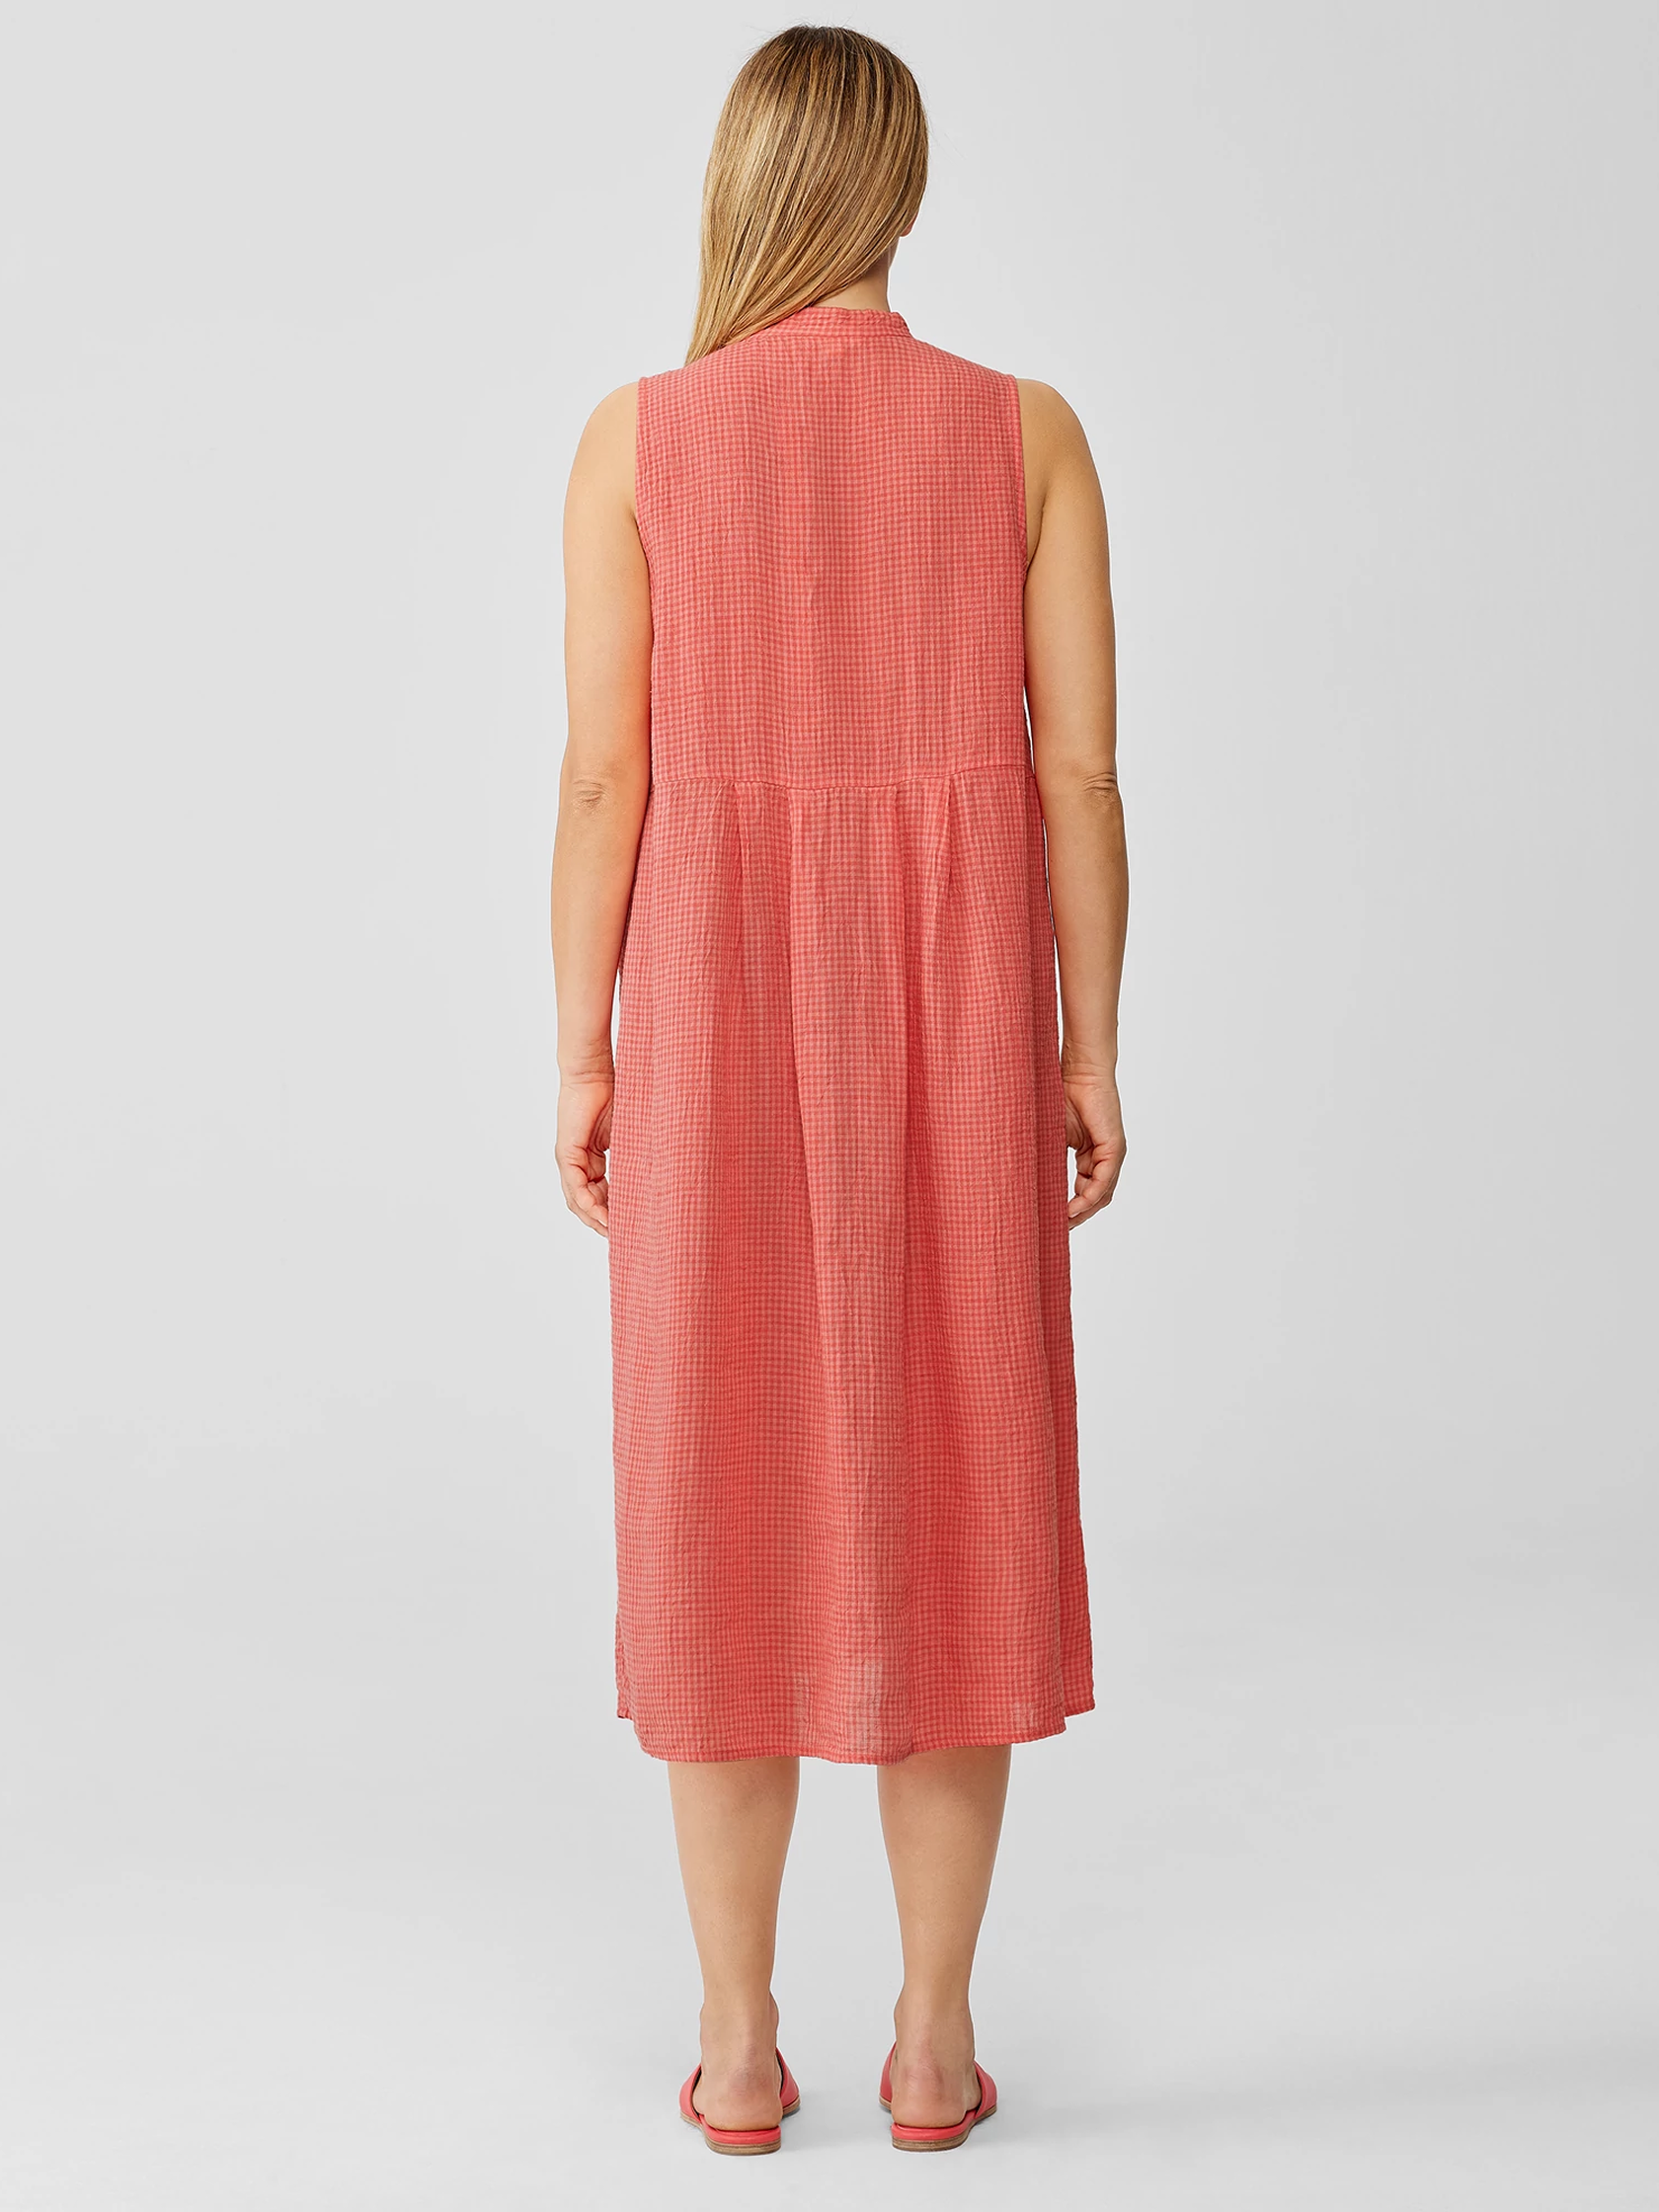 Puckered Organic Linen Pleated Dress